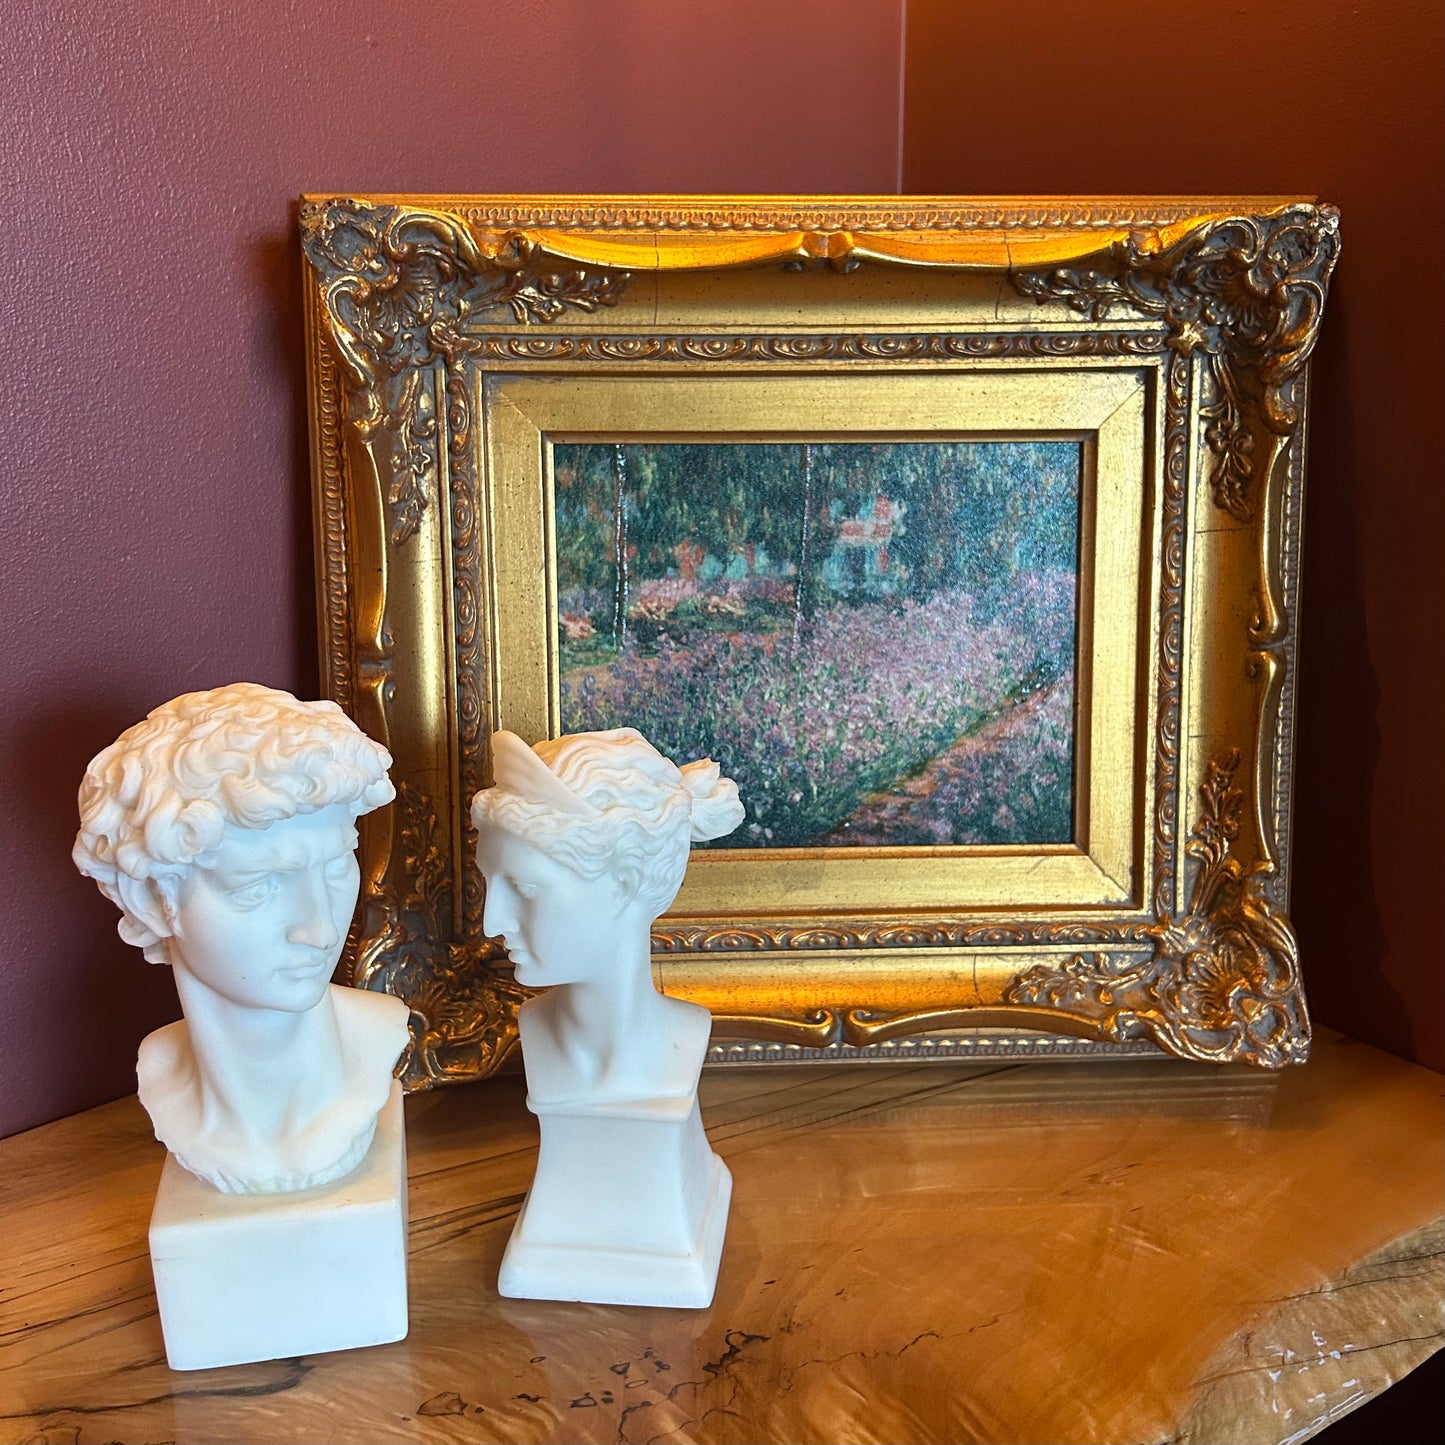 Monet 'Artist's Garden' reproduction with gilded frame